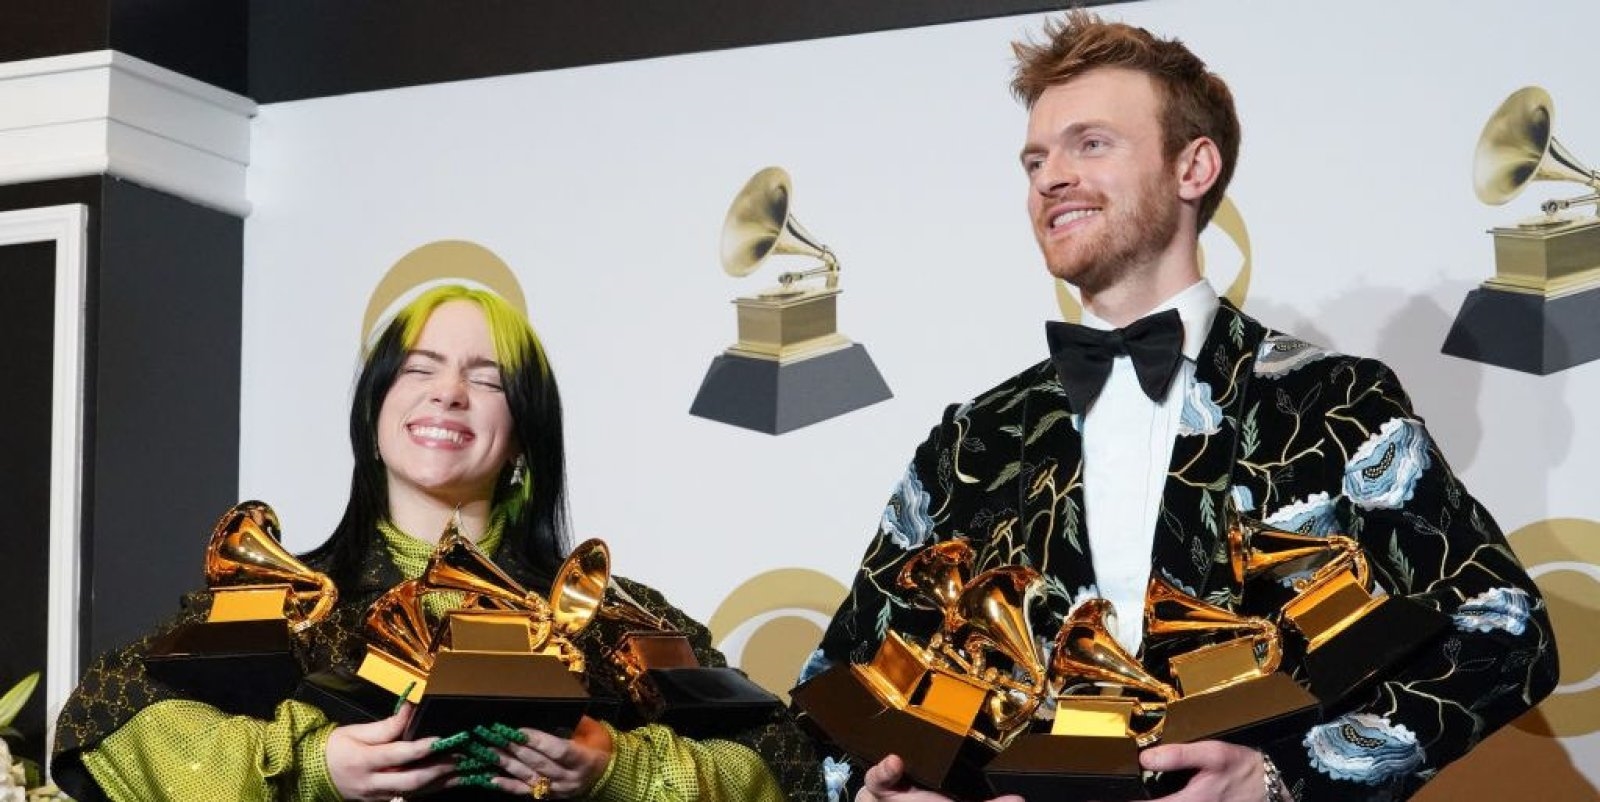 Billie Eilish proved anyone can access Grammy-winning gear | DeviceDaily.com